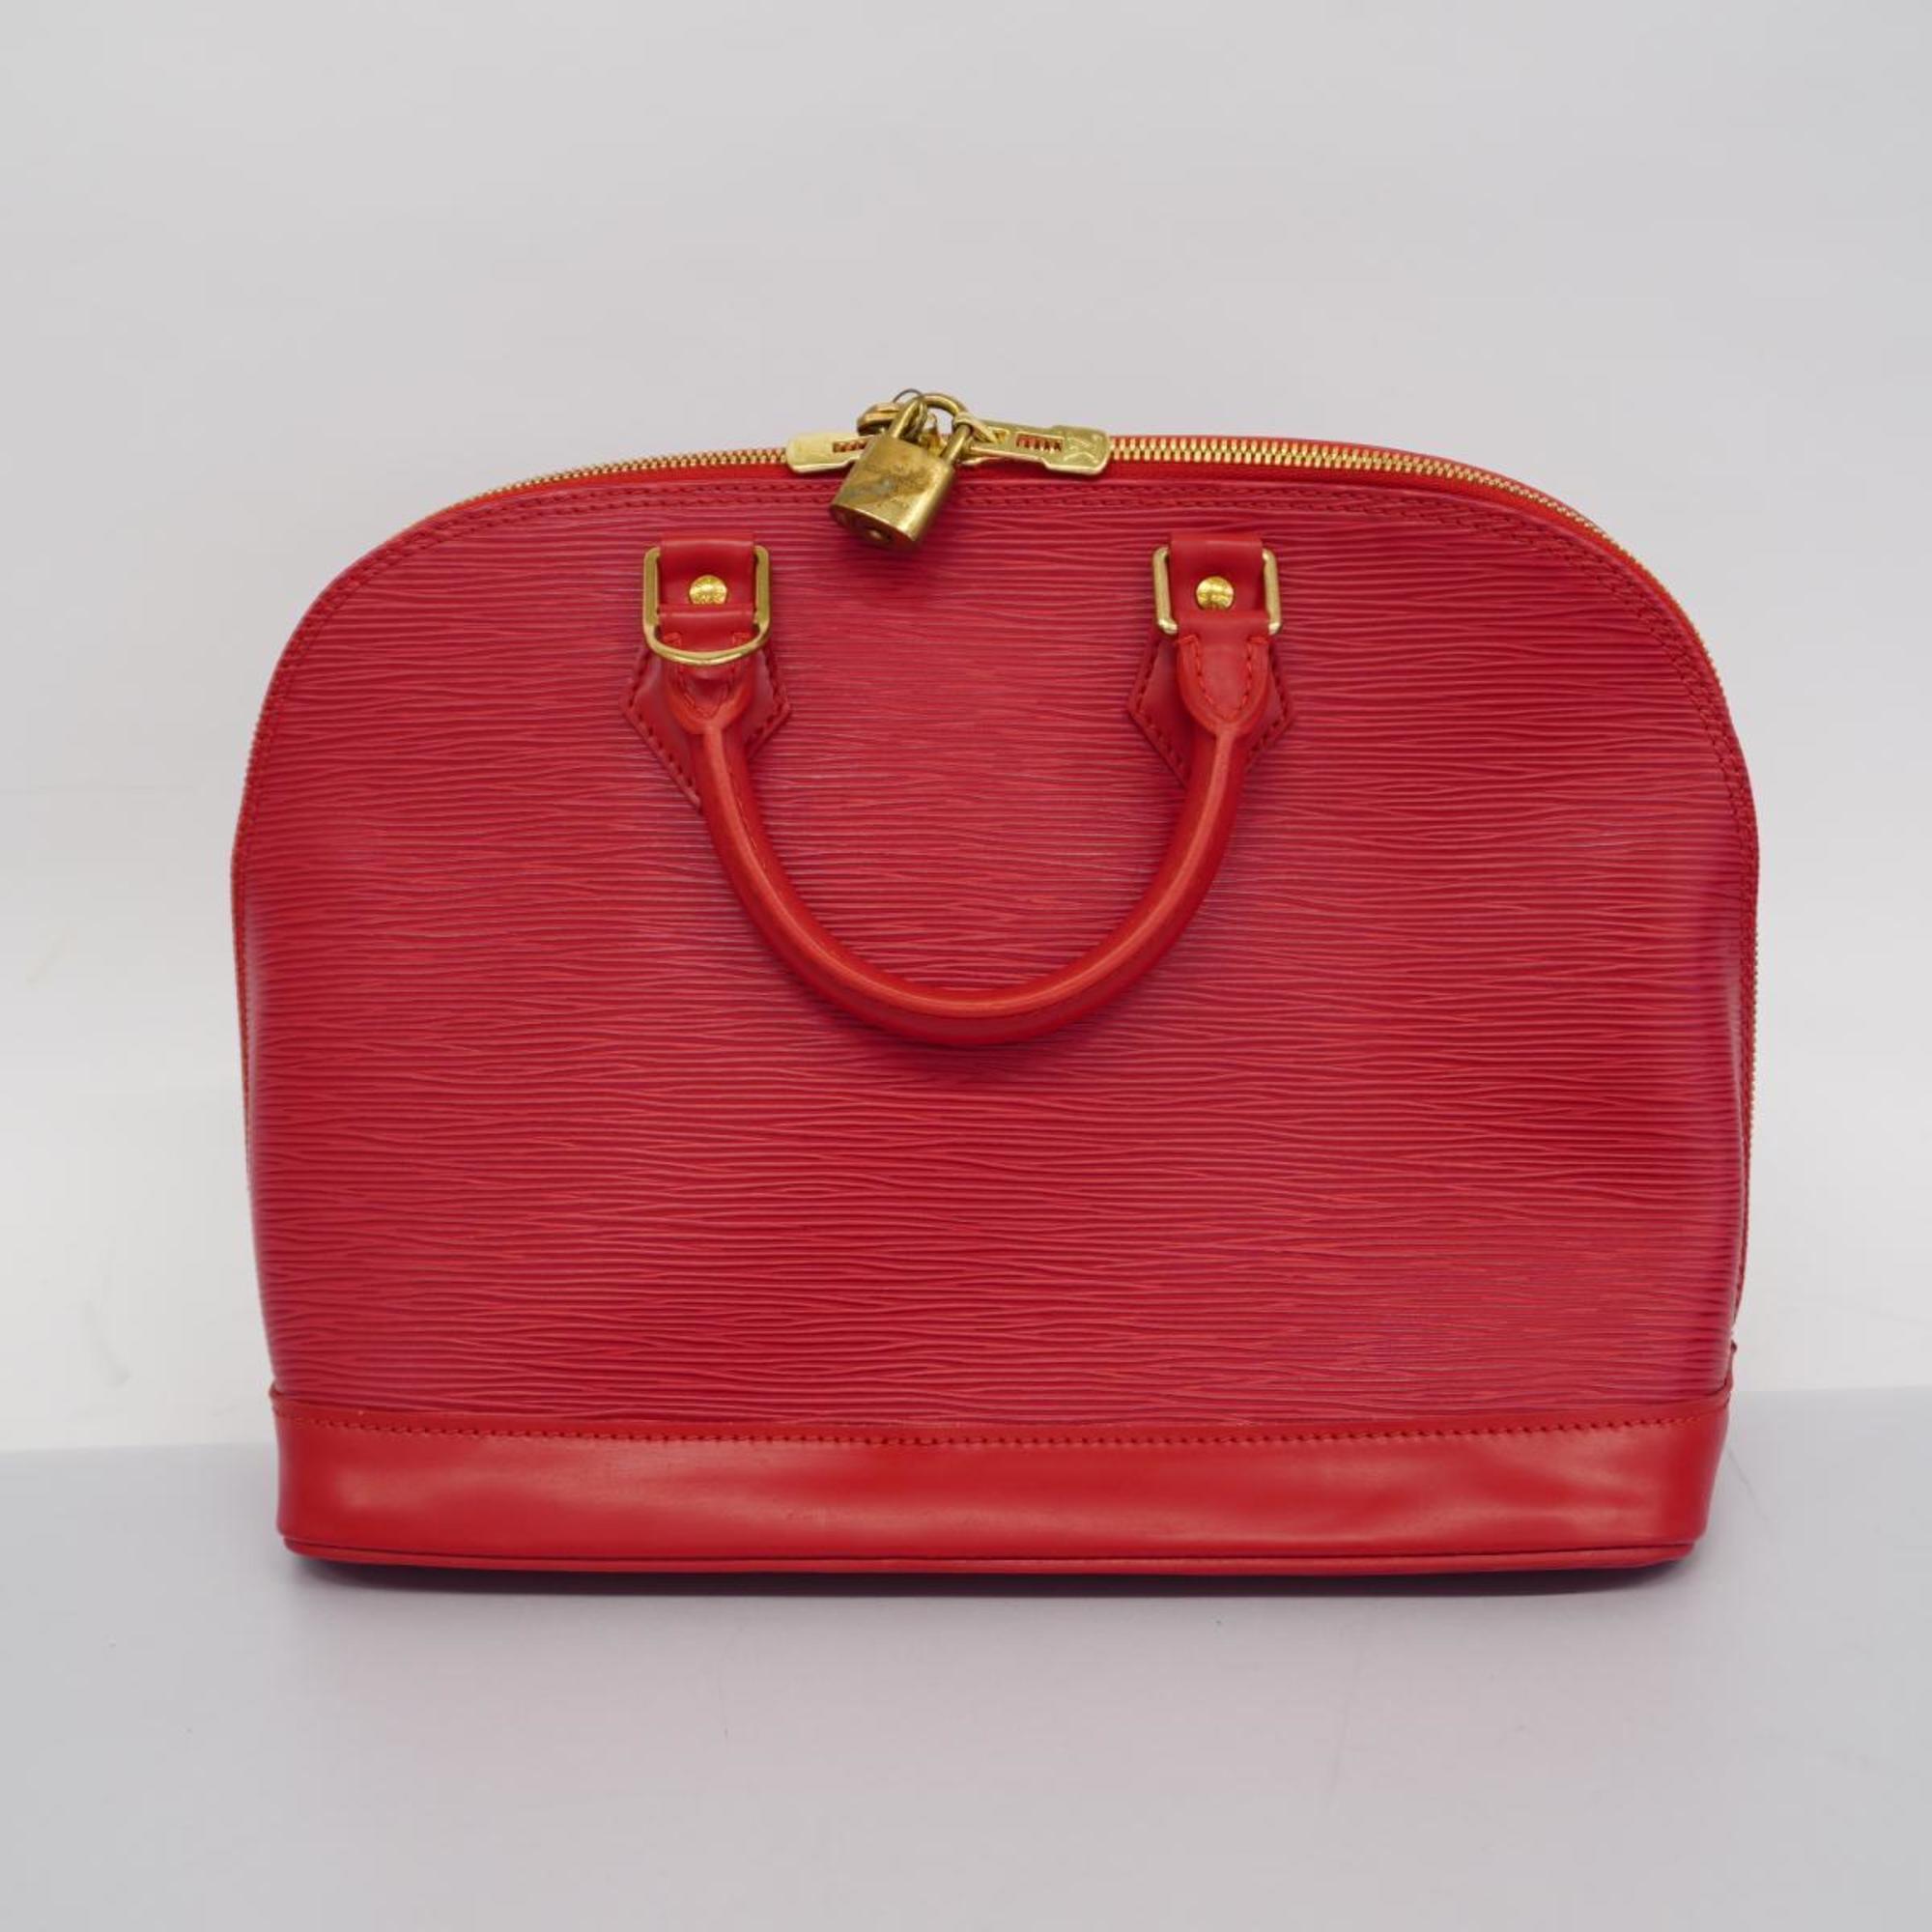 Louis Vuitton Handbag Epi Alma M52147 Castilian Red Ladies